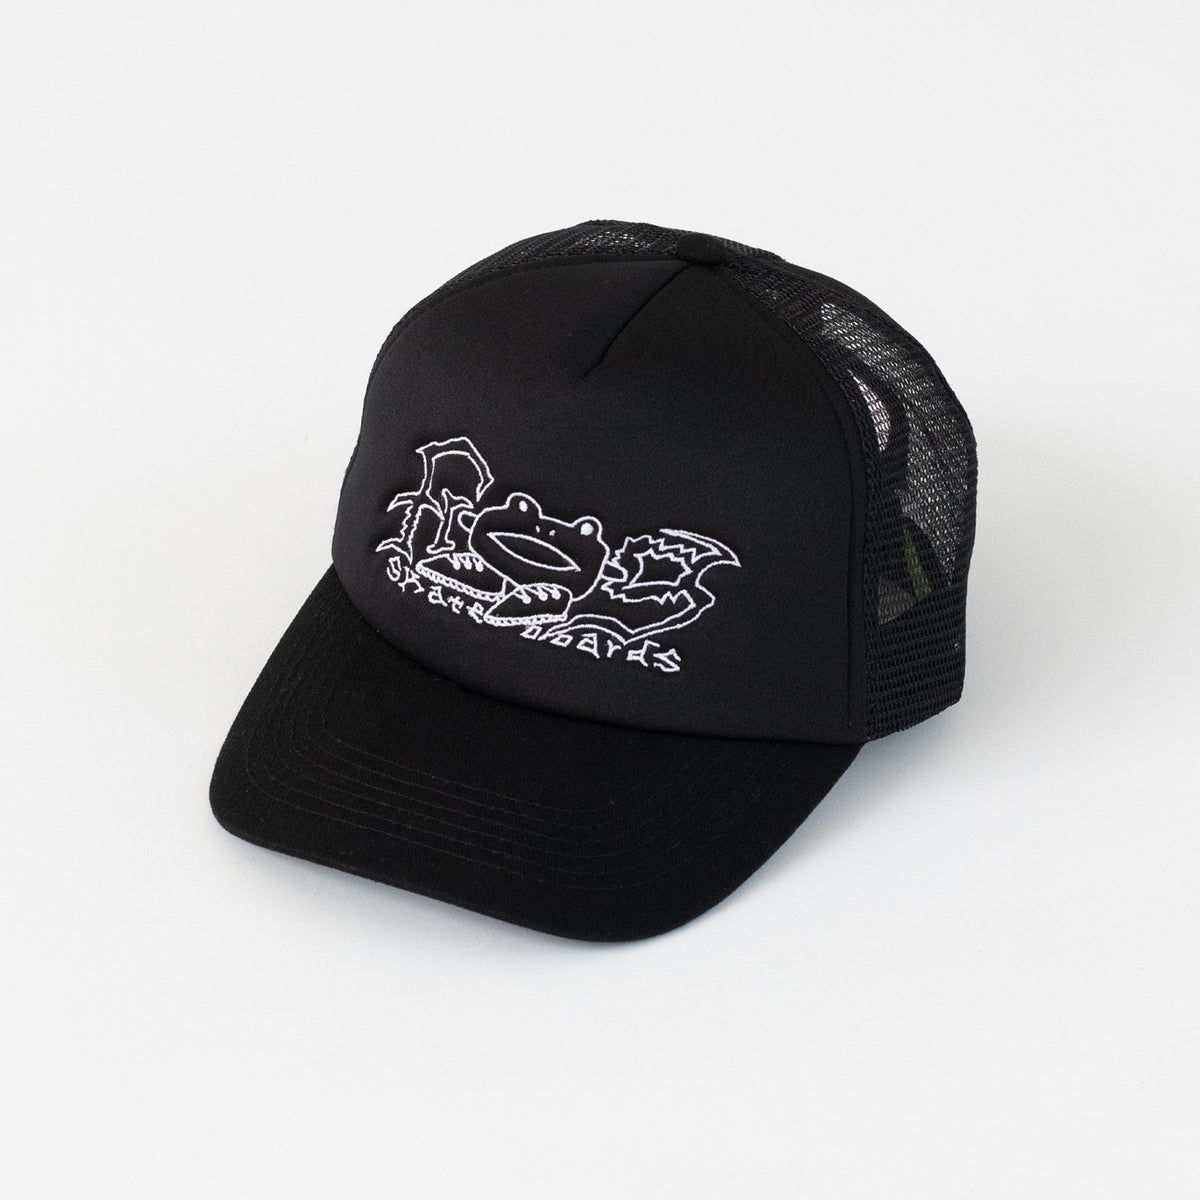 Big Shoes Trucker Hat (Black)